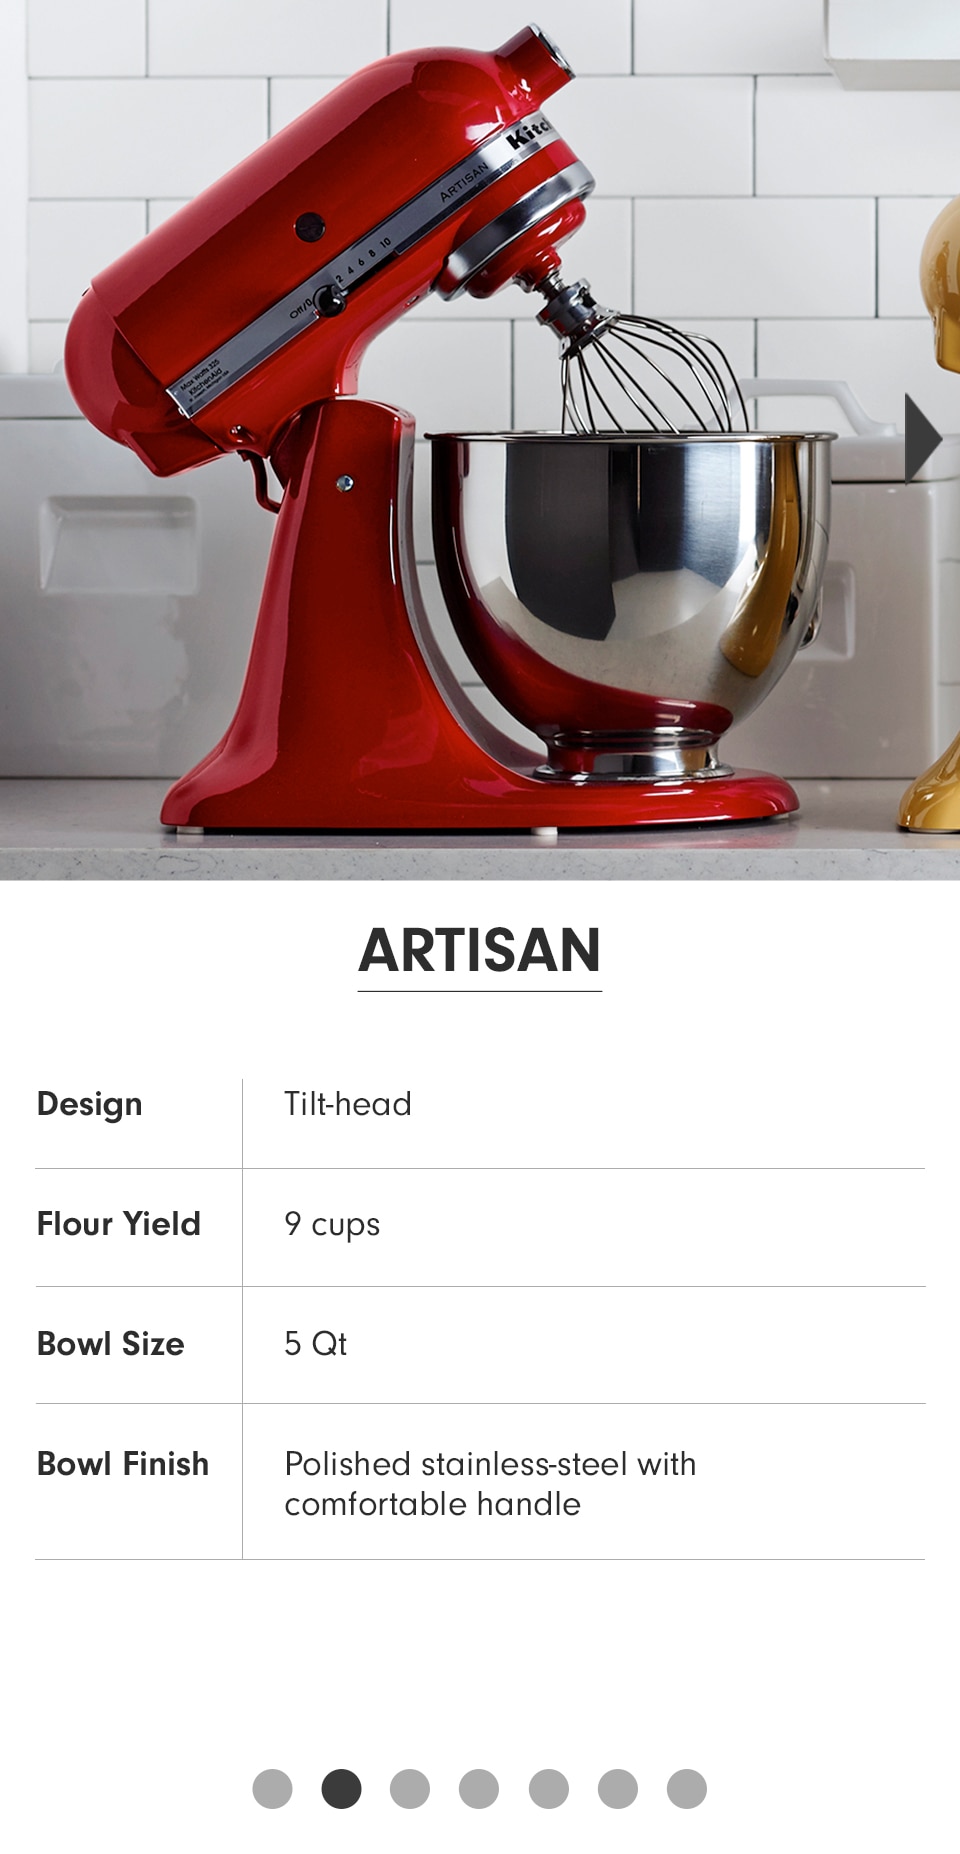 KitchenAid Artisan Mixer Comparison Page